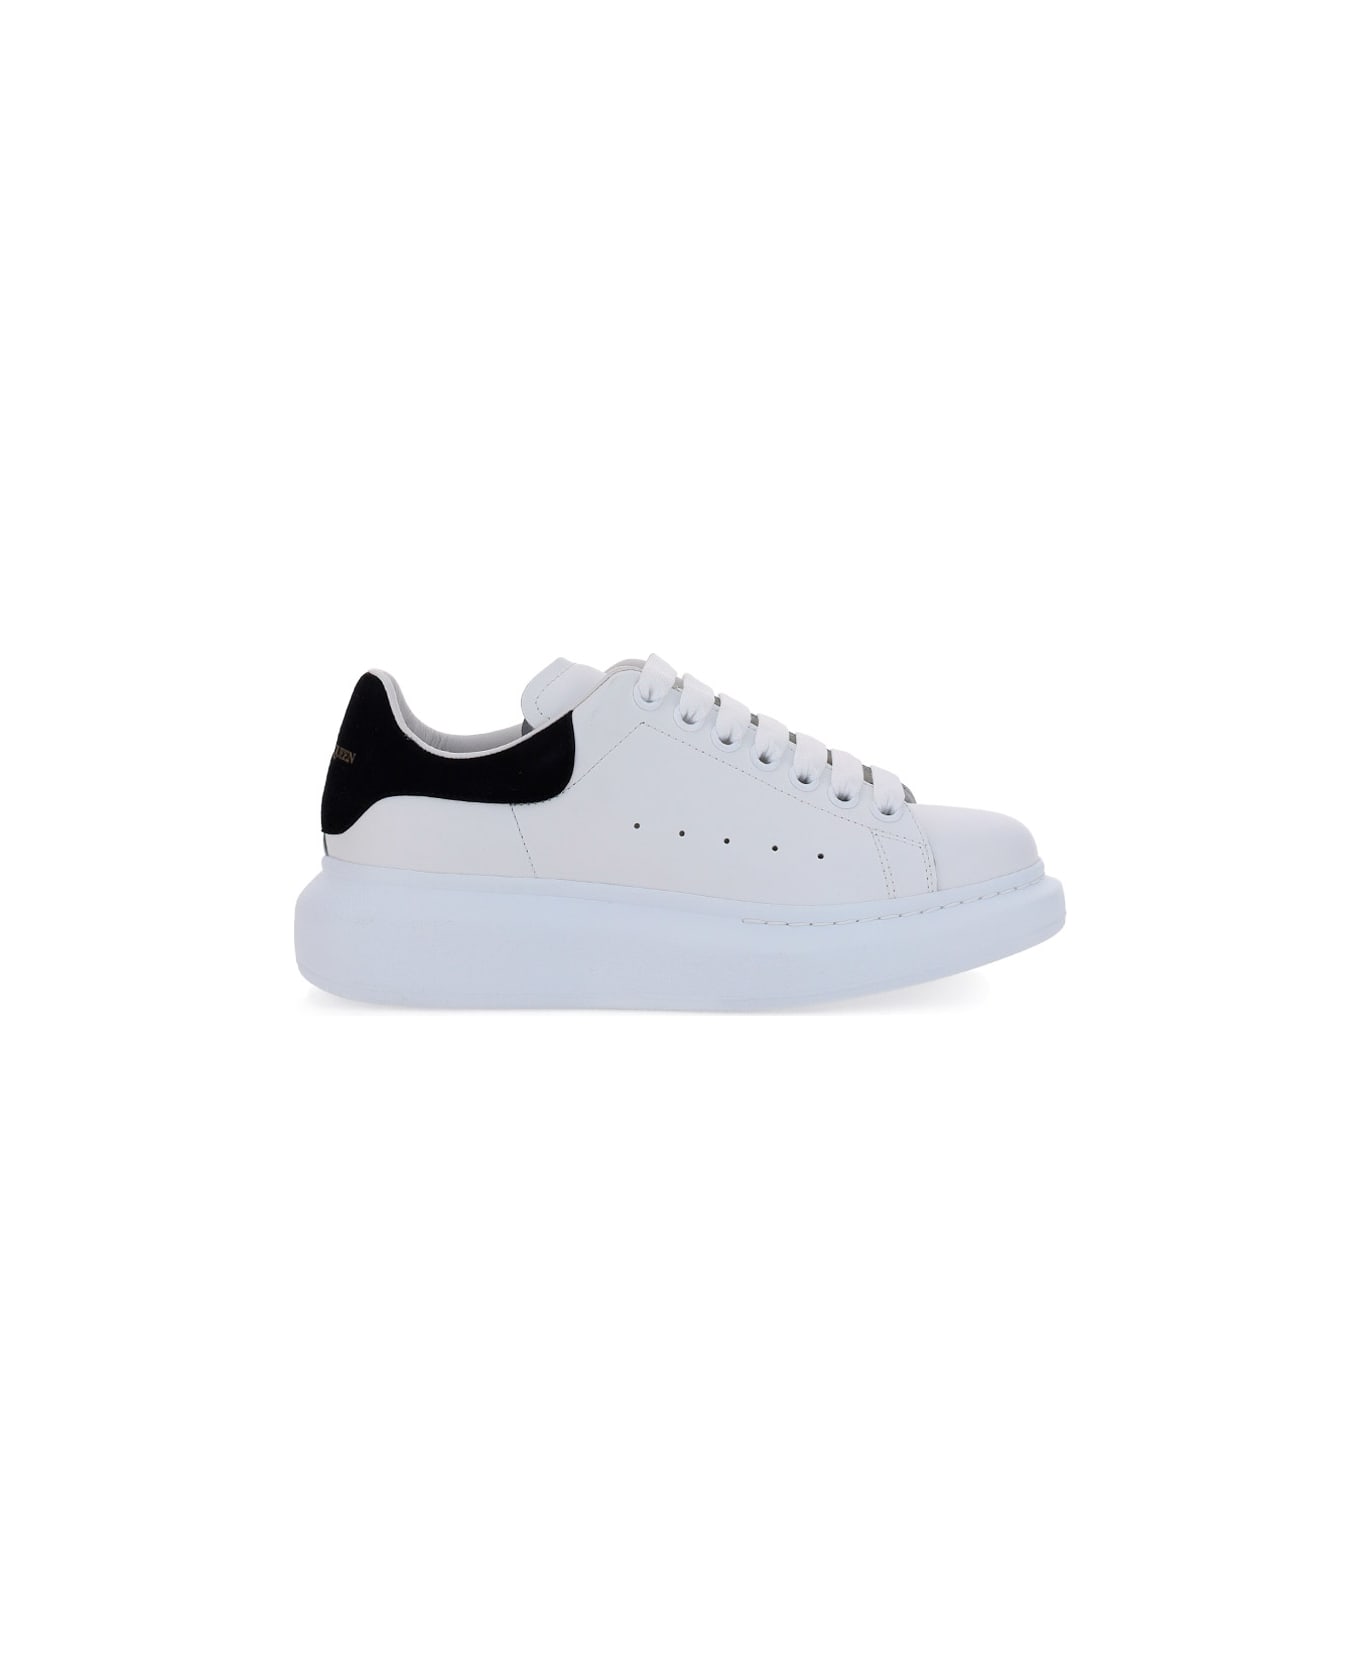 Alexander McQueen Sneakers - White/black